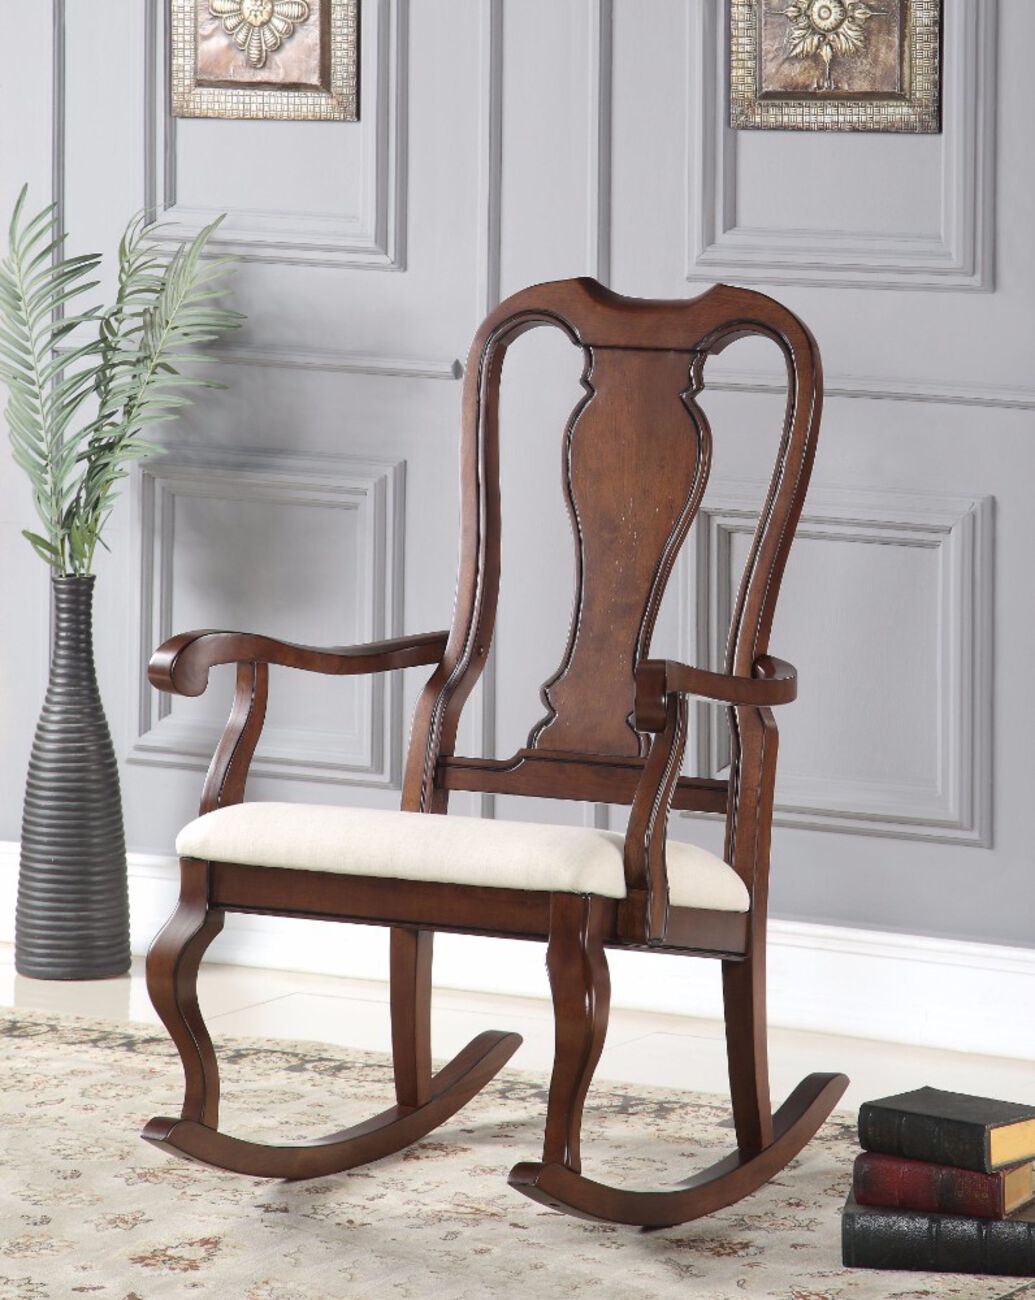 Sheim Rocking Chair, Cream and Brown